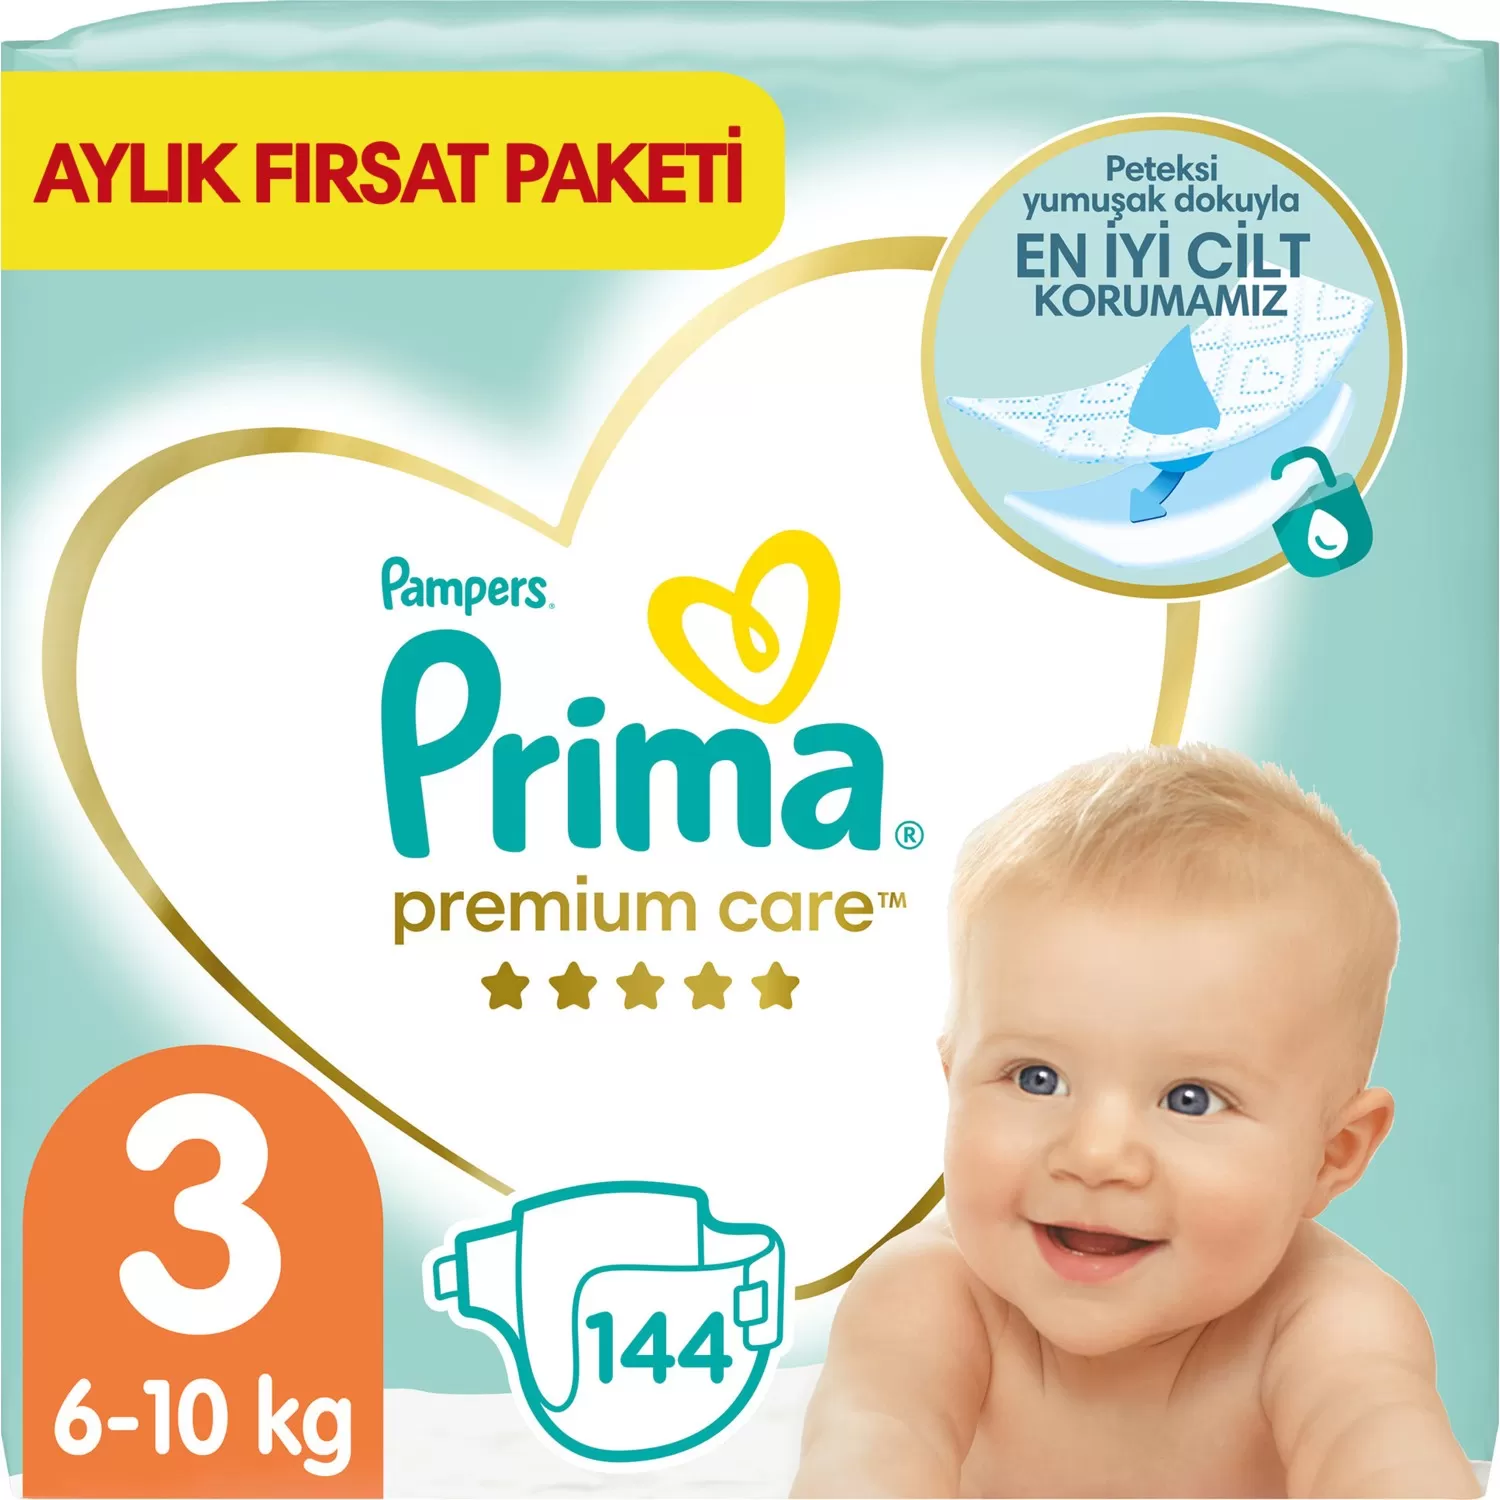 Prima Premium Care 3 Beden Aylık Fırsat Paketi 144 Adet